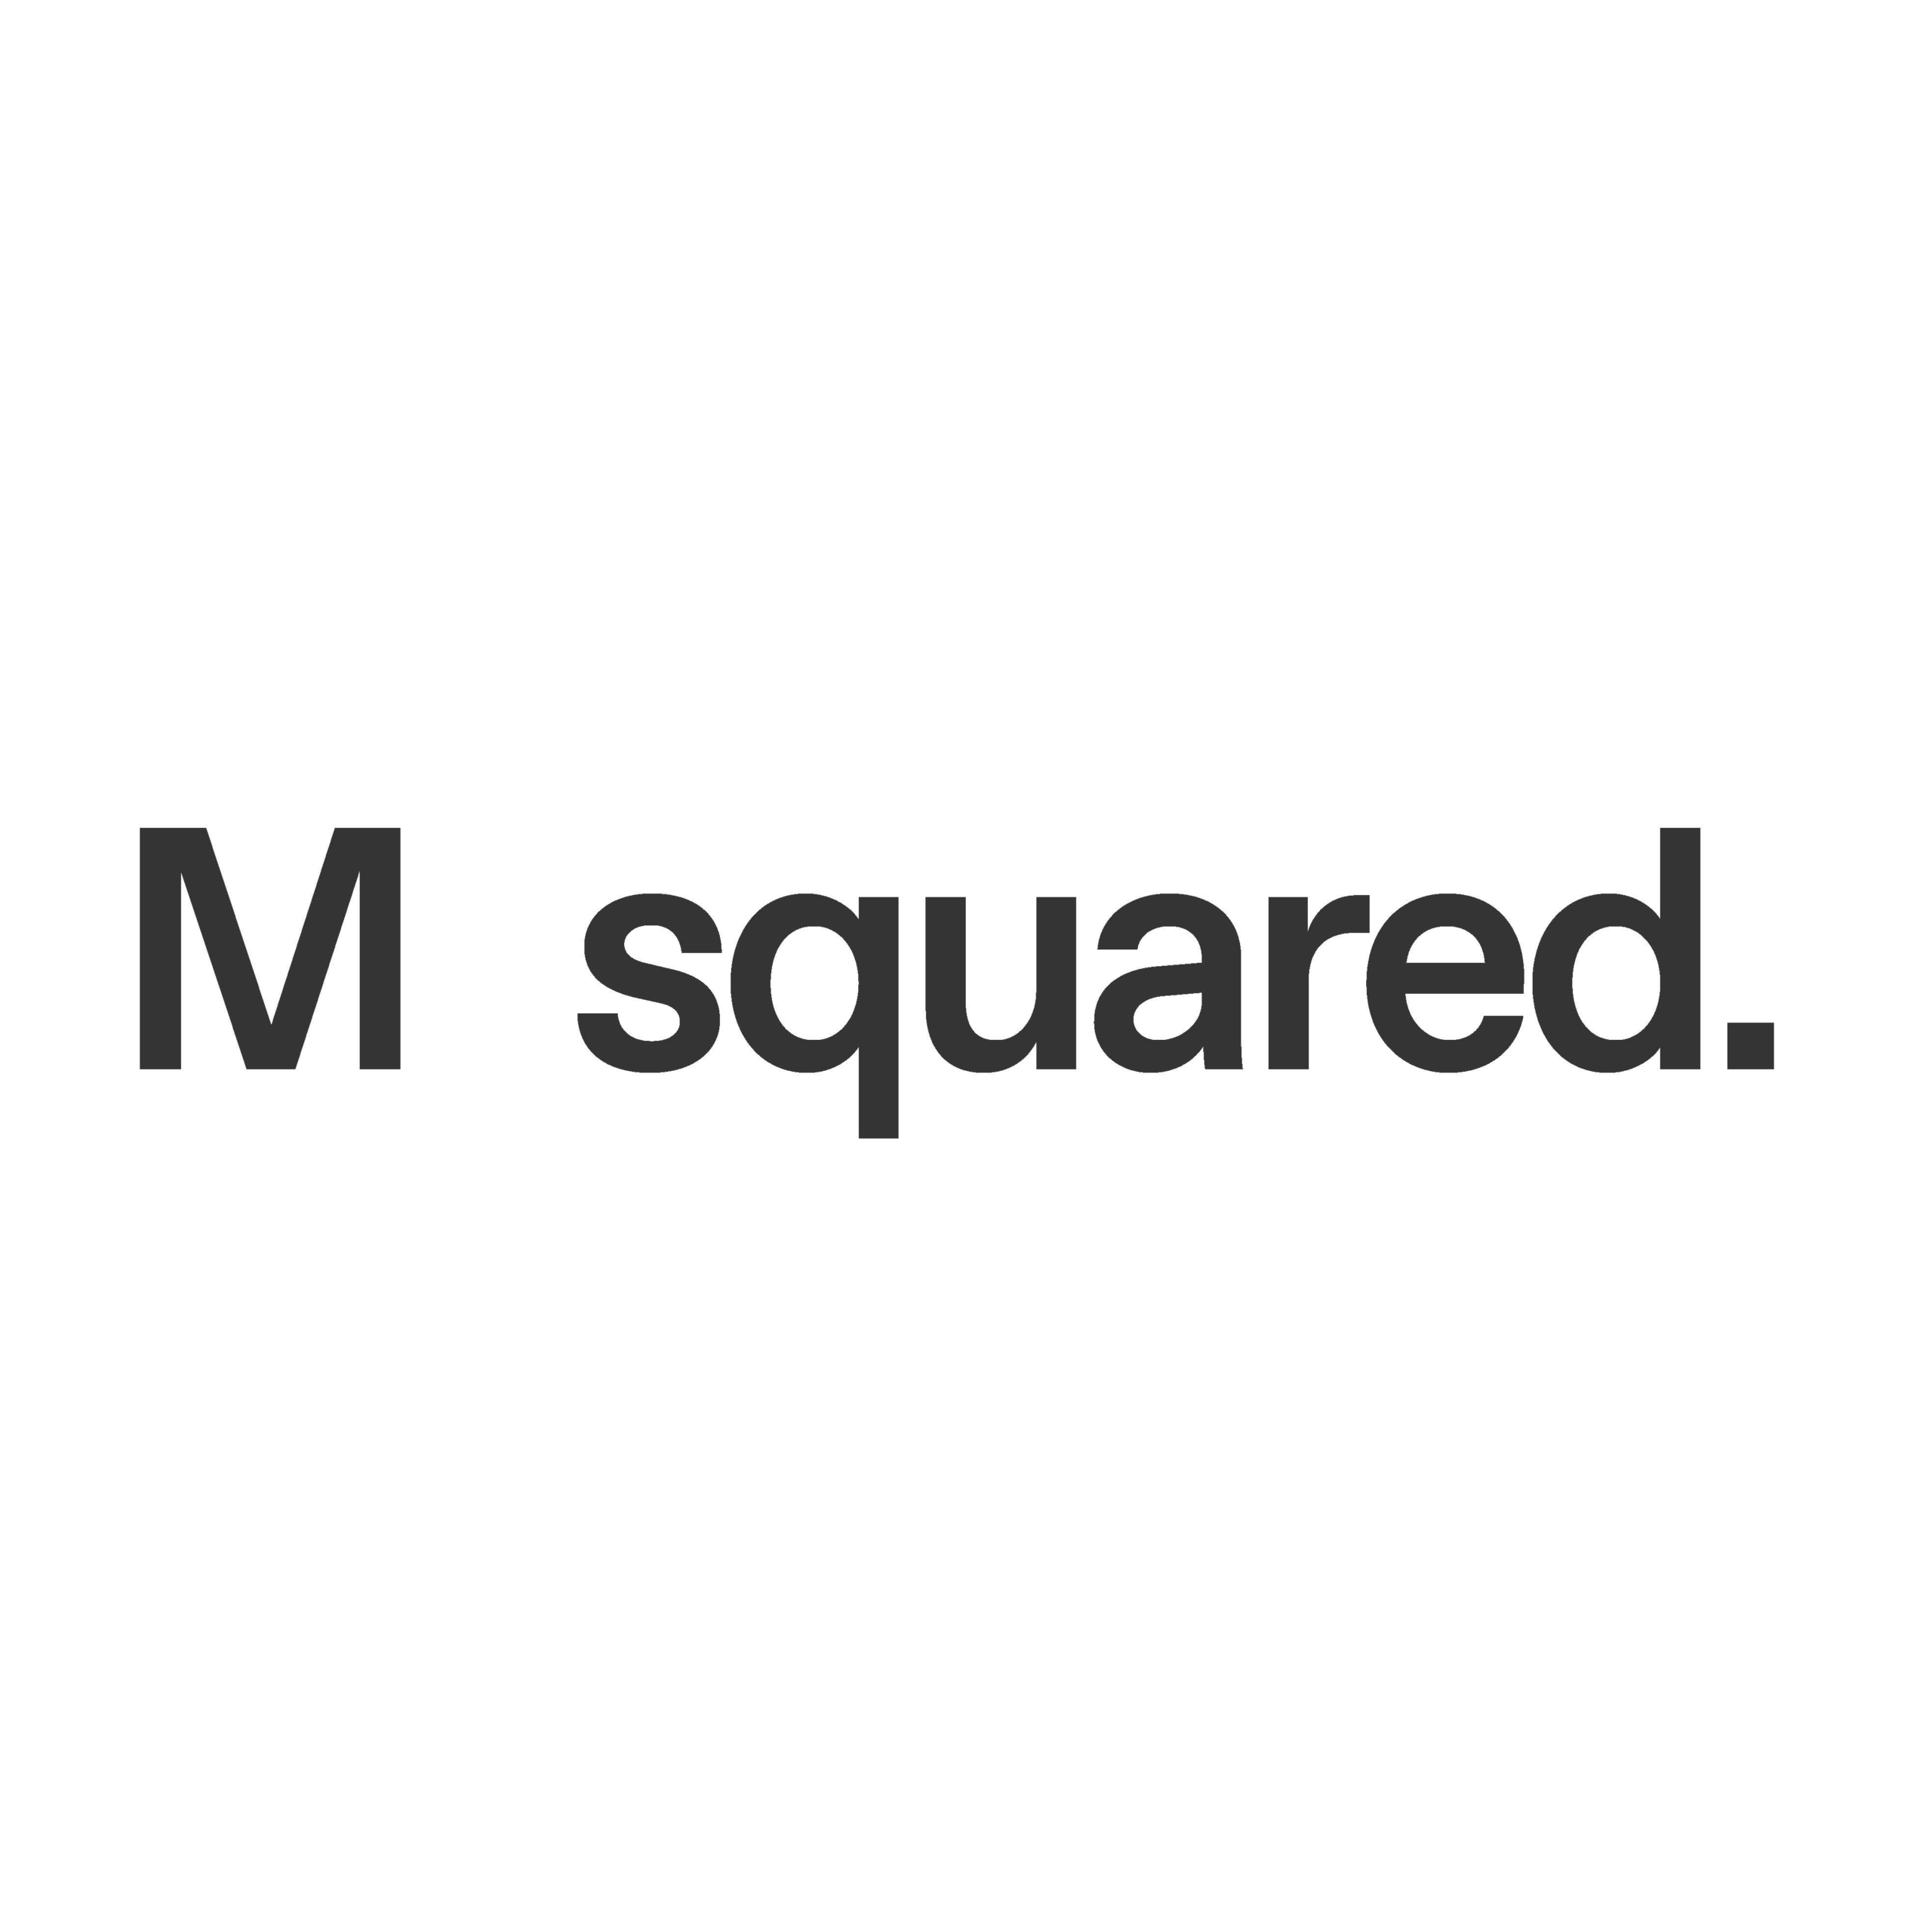 M squared developments